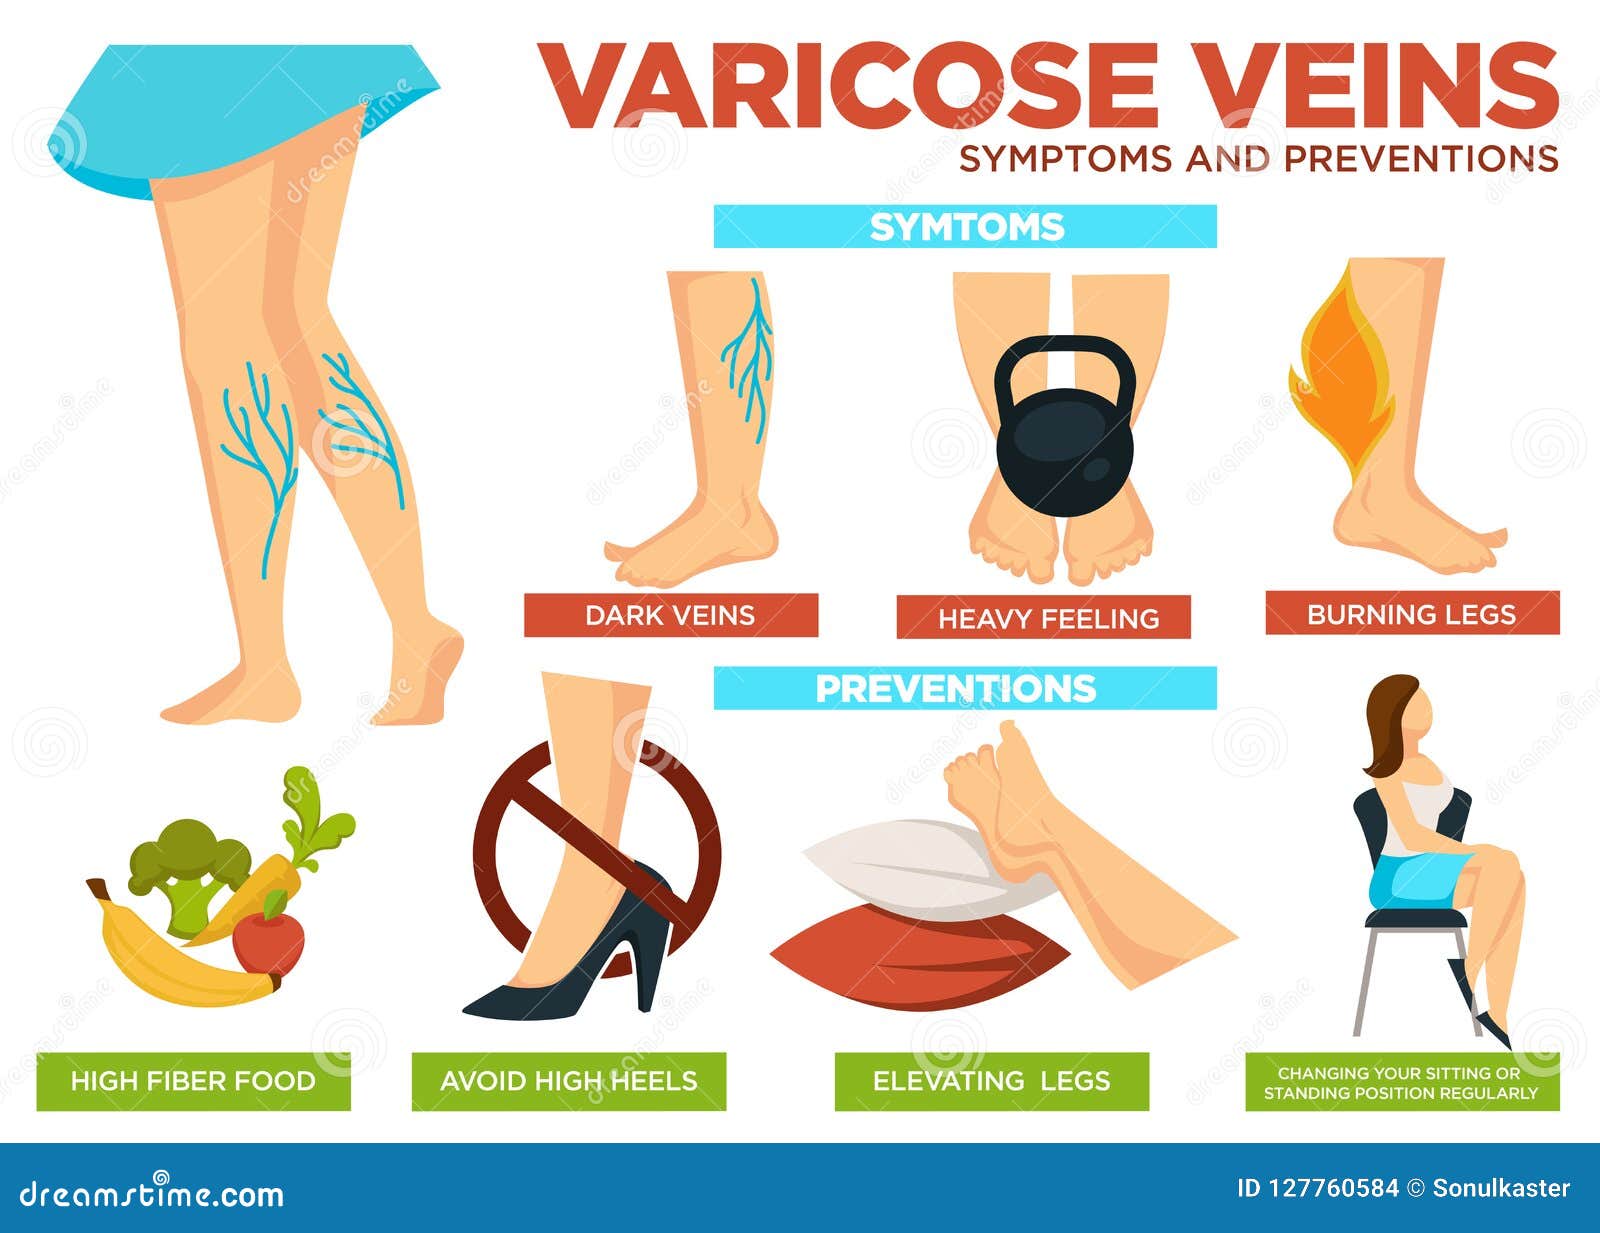 varicose veins symptoms)